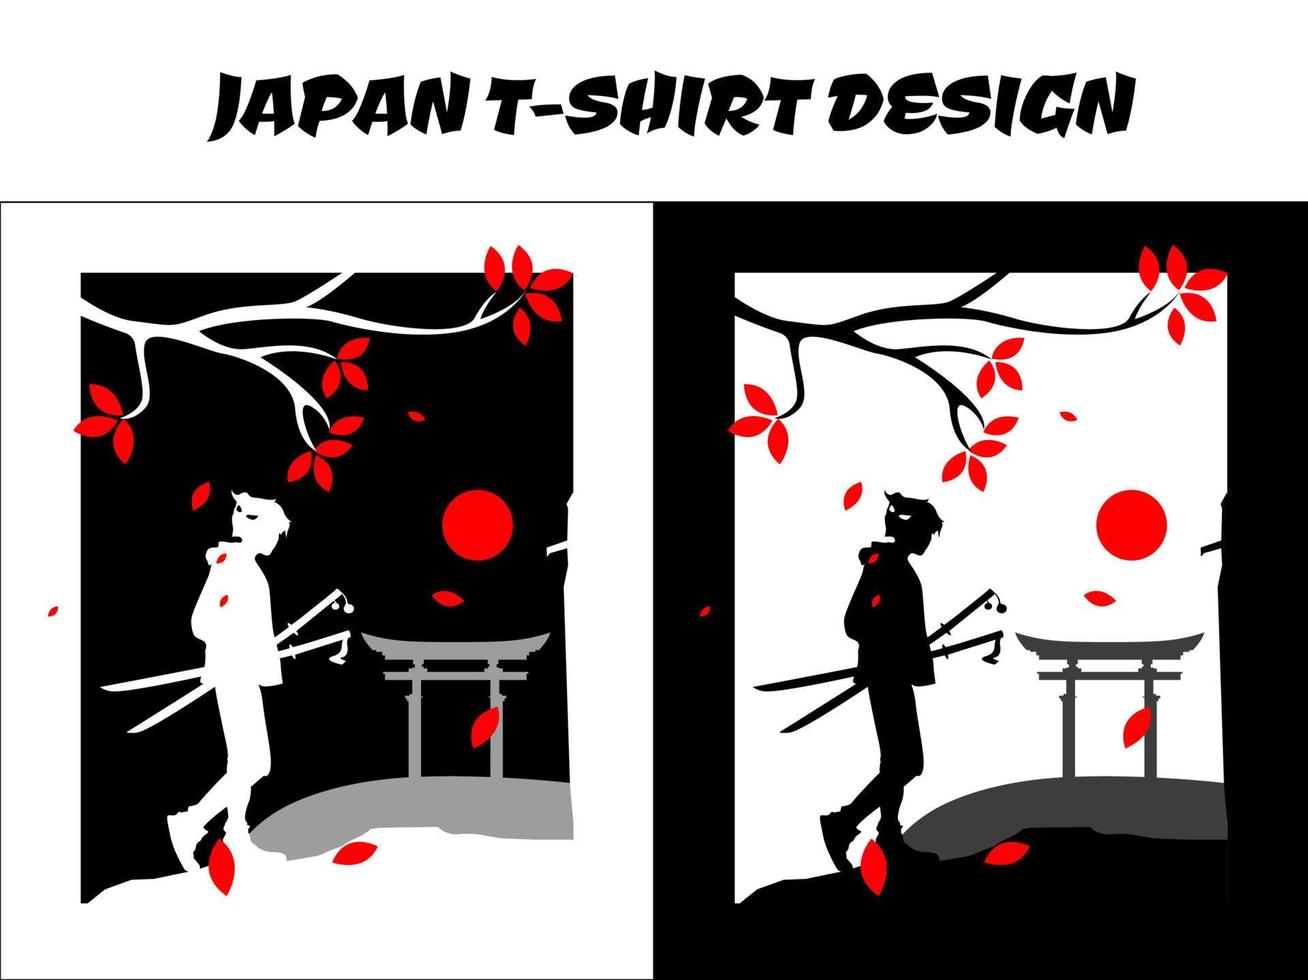 chico samurái urbano con máscara oni en la cabeza, vector de anime samurai de silueta para el concepto de camiseta de diseño, diseño de camiseta japonesa, silueta para un tema japonés, niño caminando con dos espadas